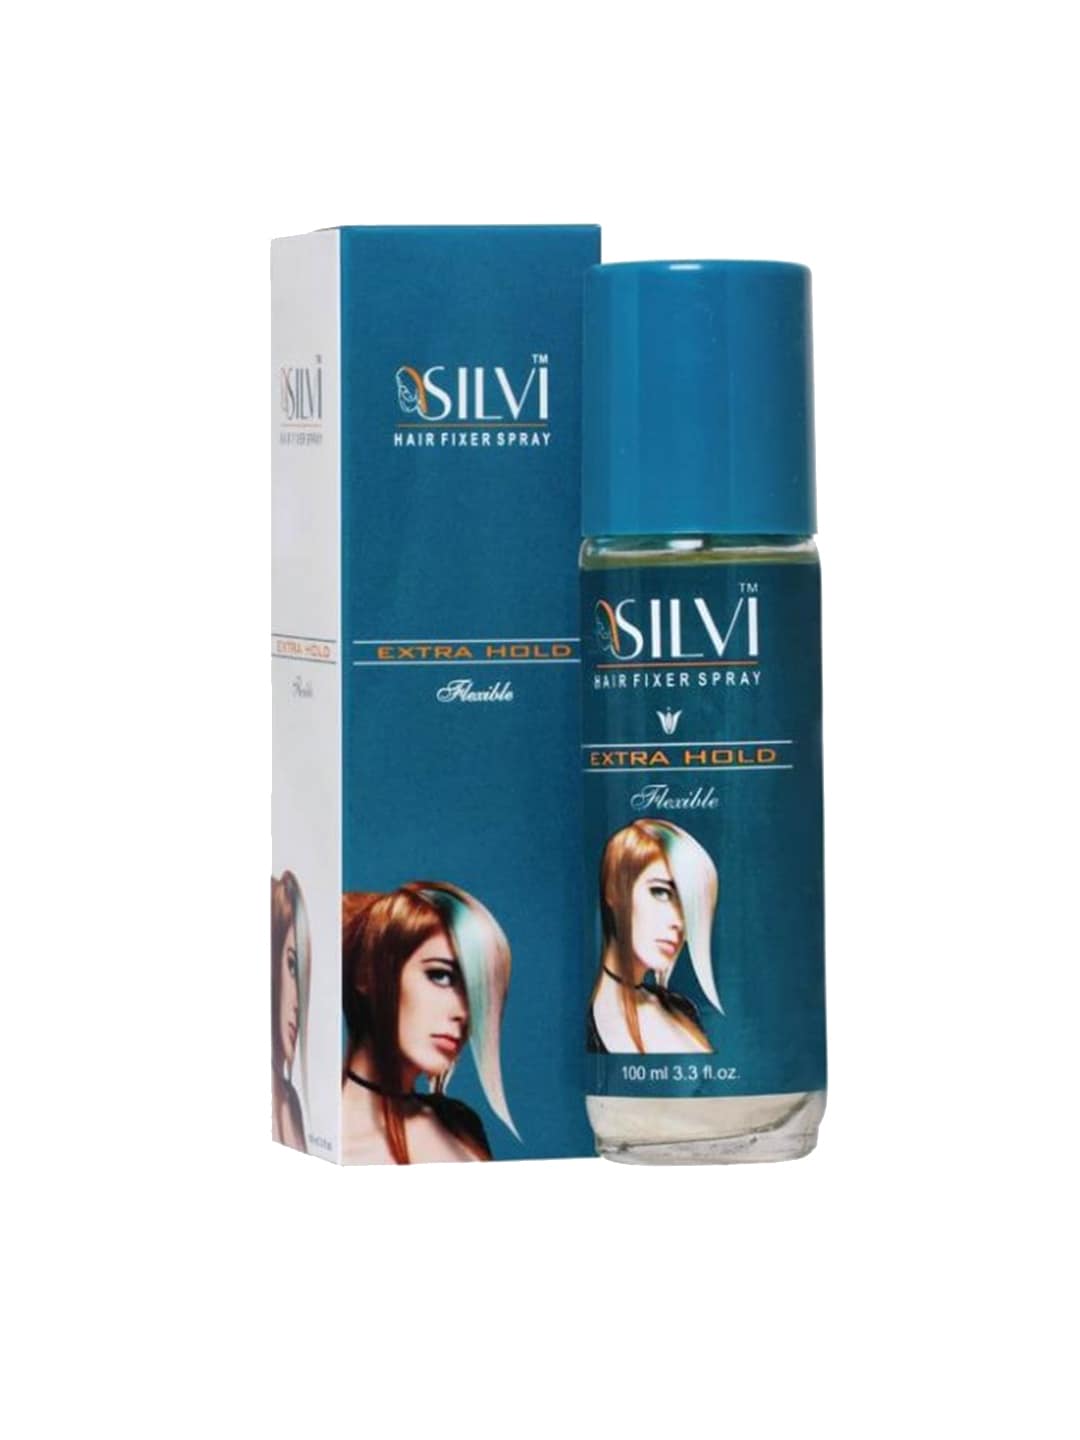 SILVI Hair fixer spray 30 ml Price in India